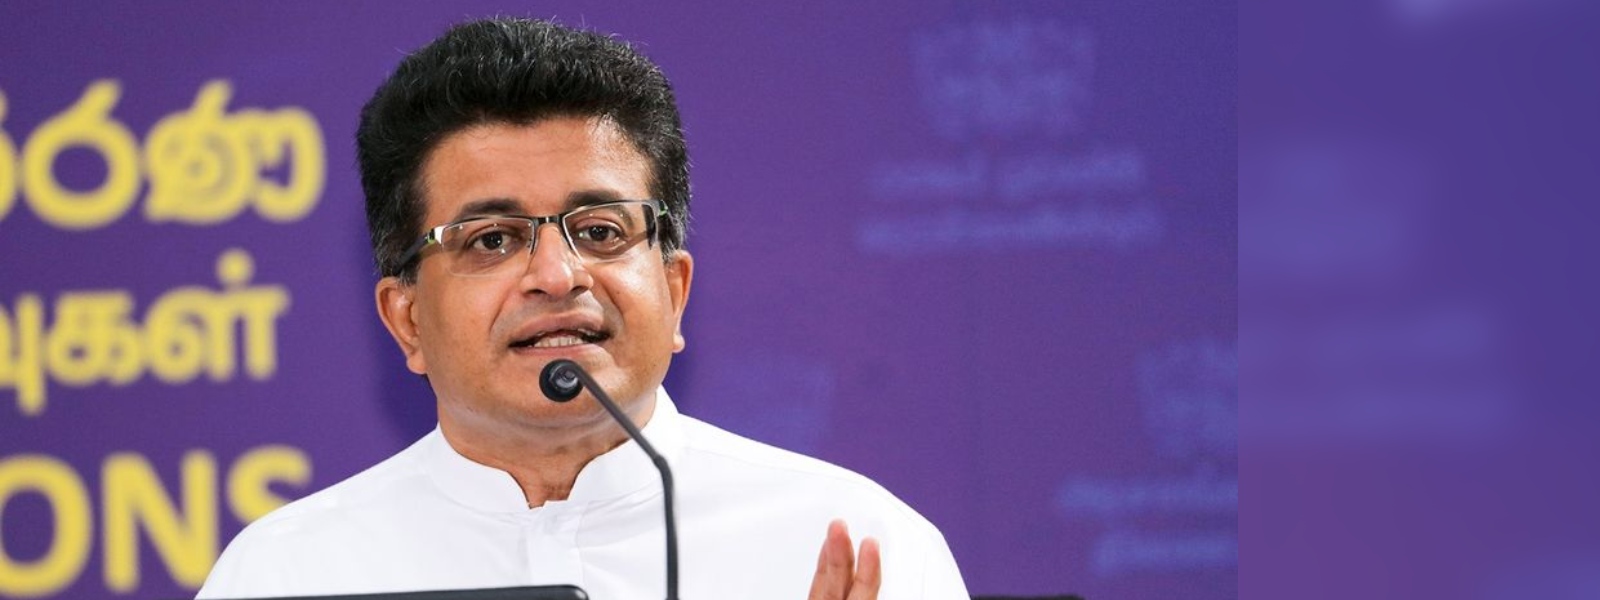 India ready to join Sri Lanka’s oil exploration efforts, says Gammanpila